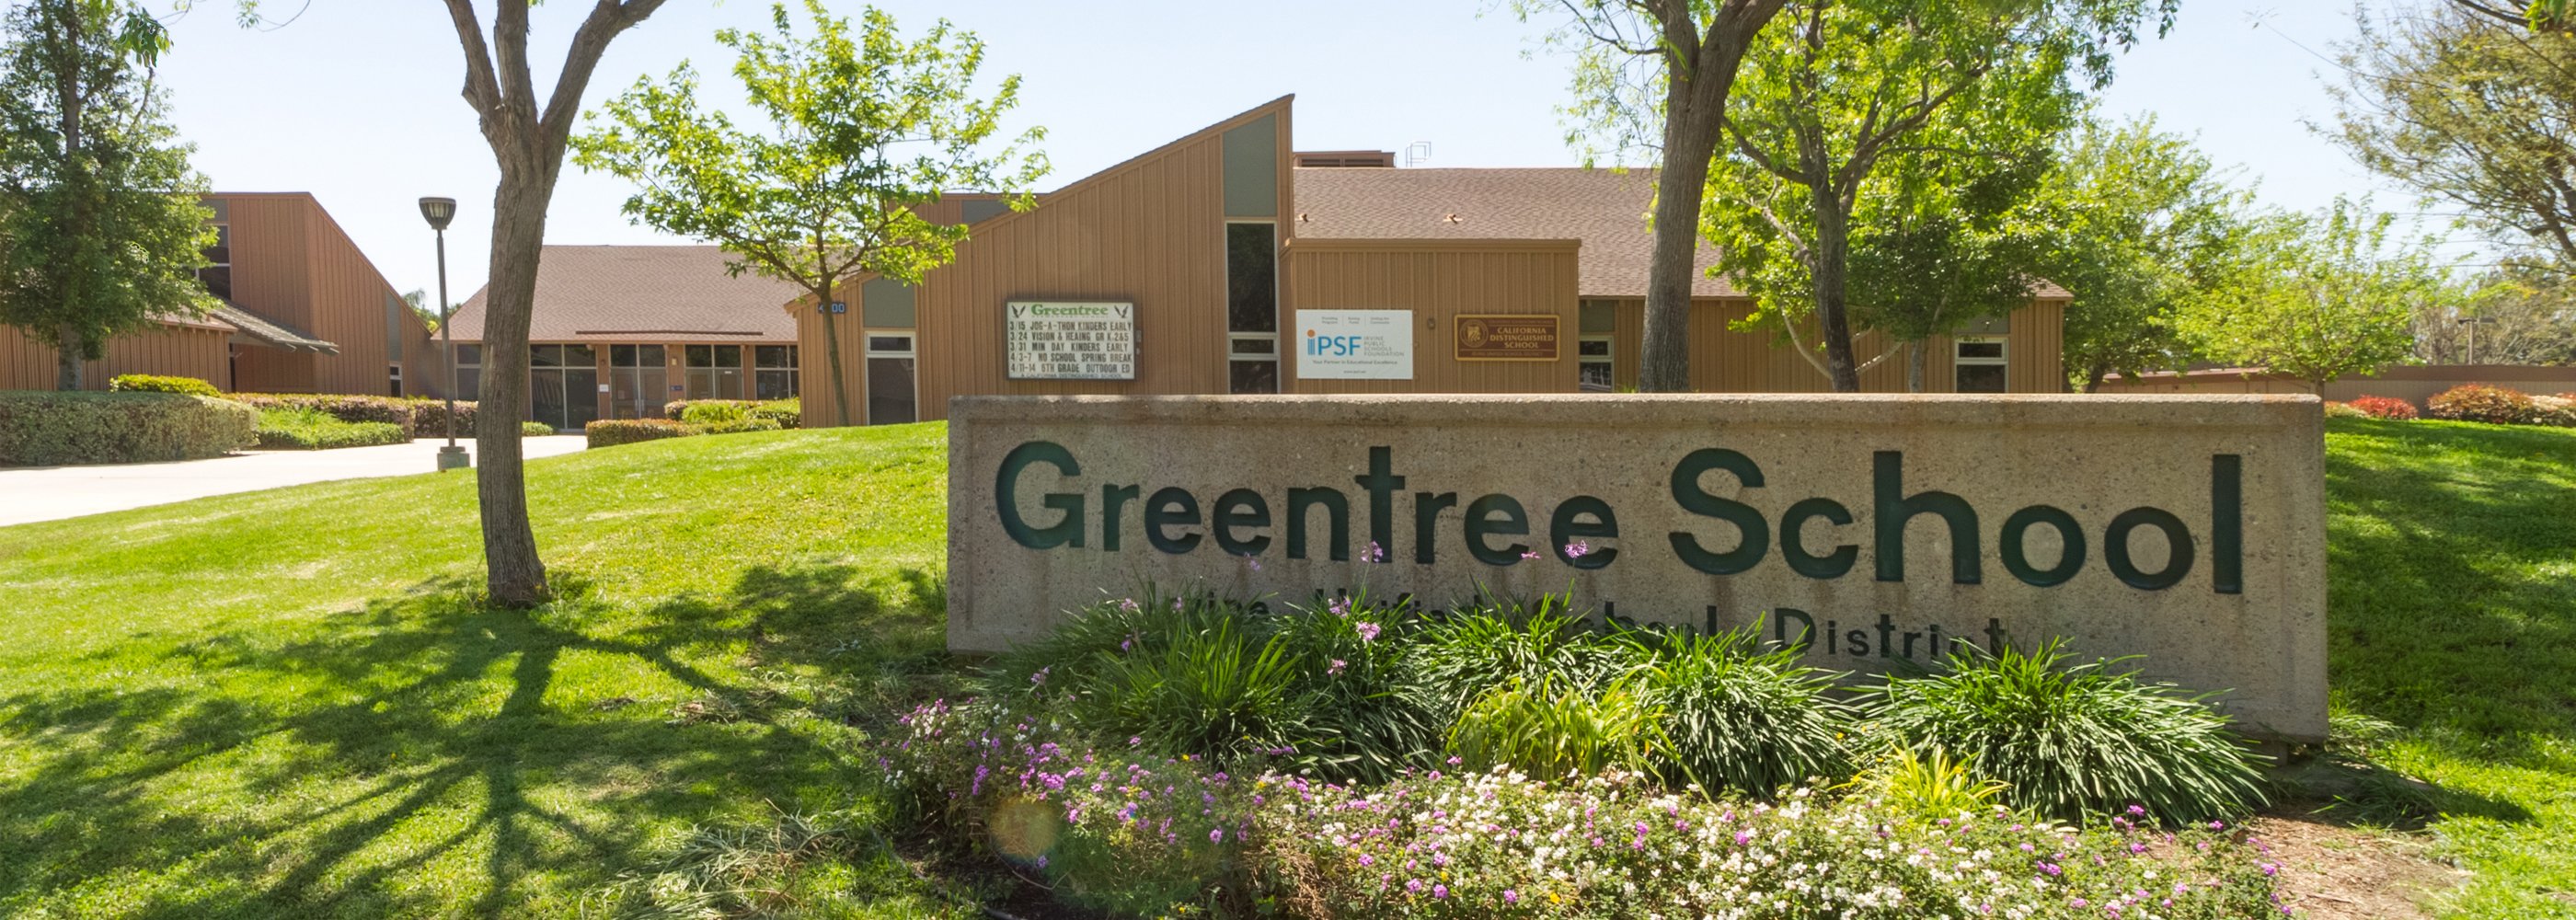 Greentree image